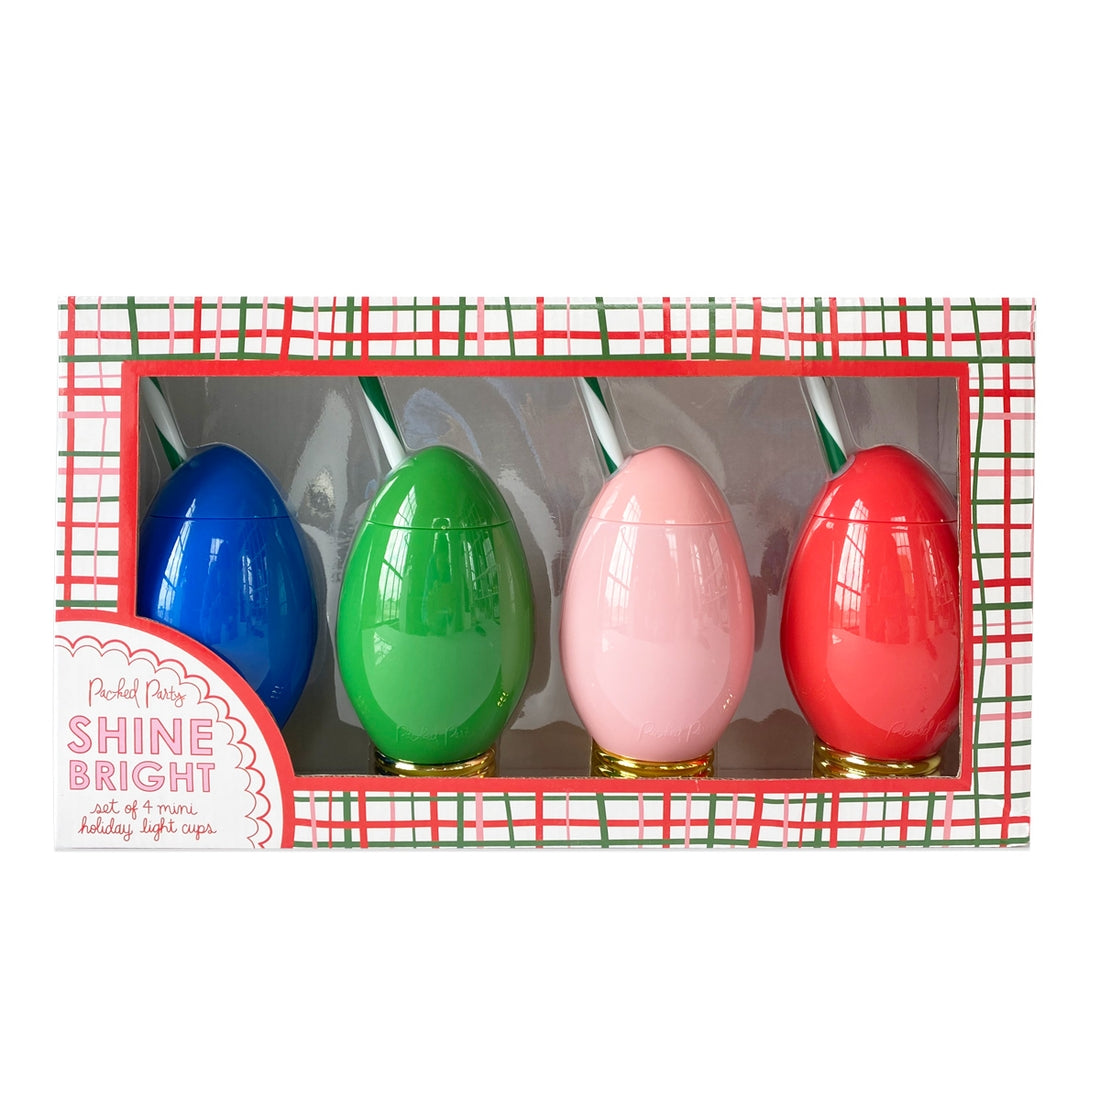 Minglin' Mini Holiday Light Cup Set